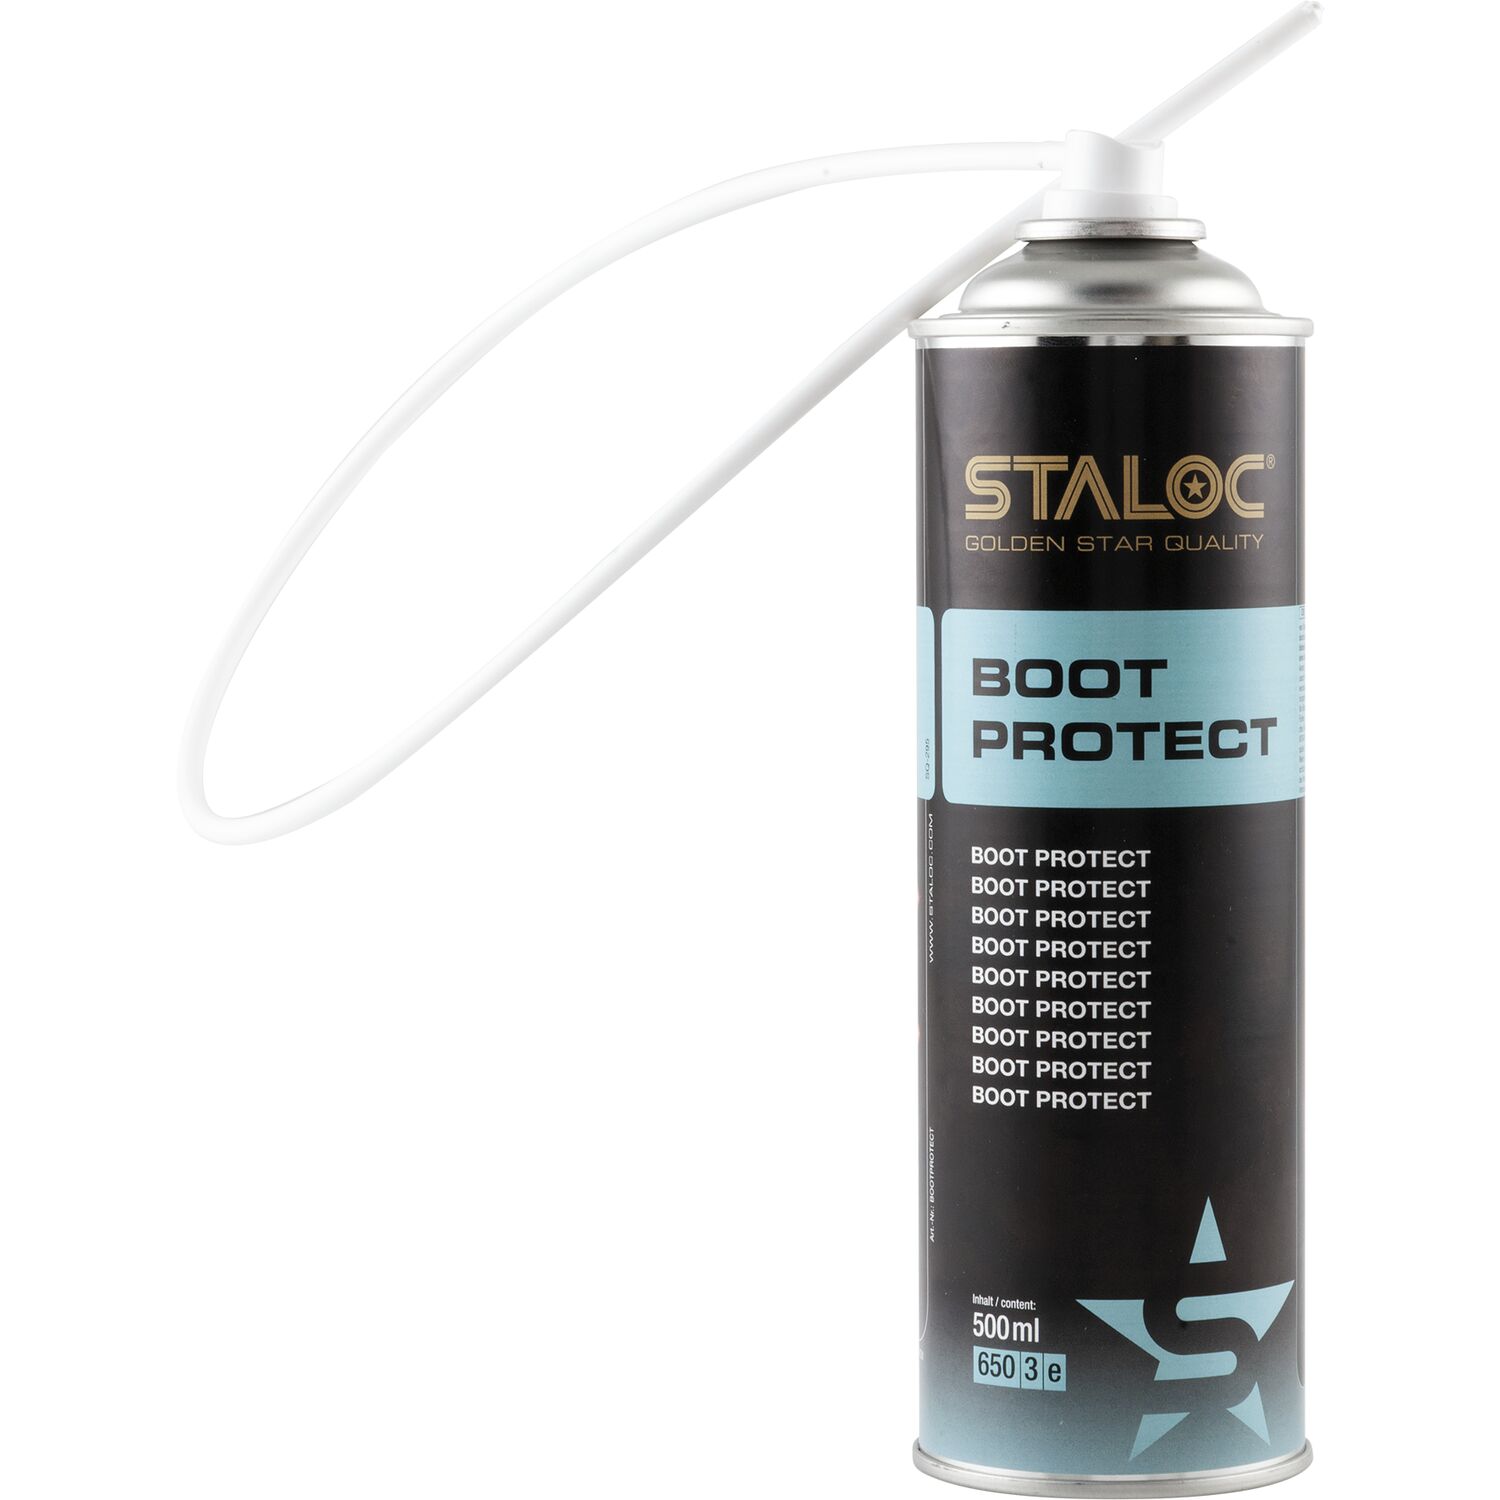 Staloc Boot Protect Schuhdeo gegen Geruch Antibakteriell – Schuh Deo Spray 500ml